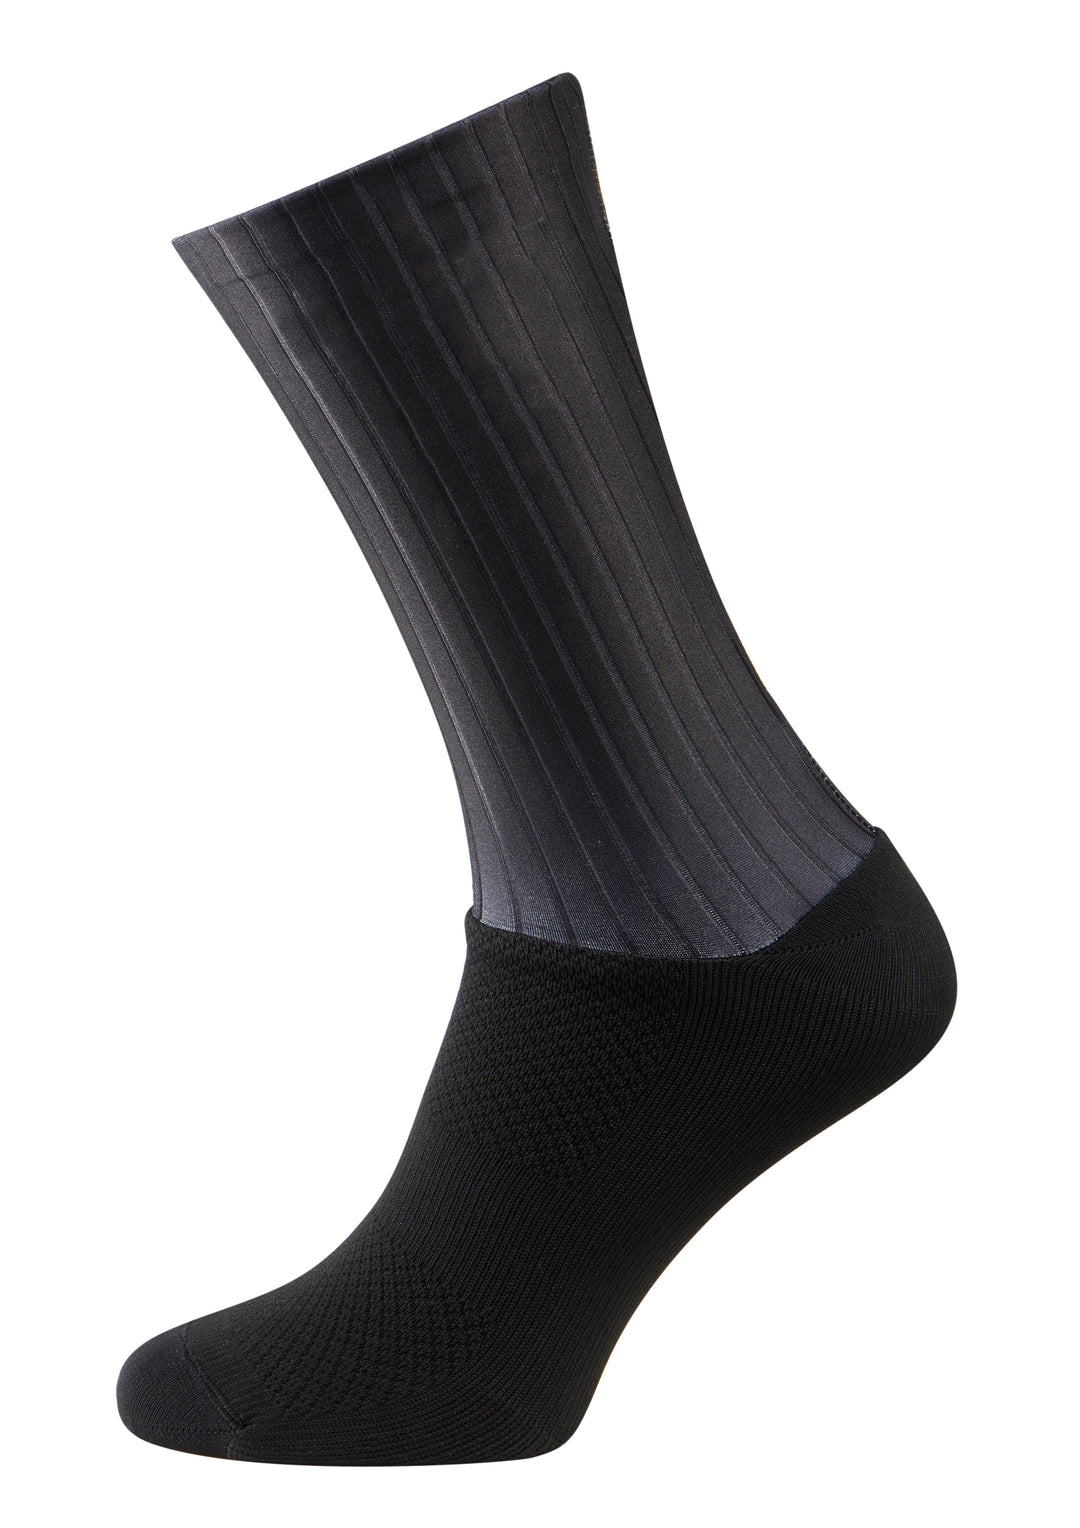 Aero-socks PRO (sin marca)